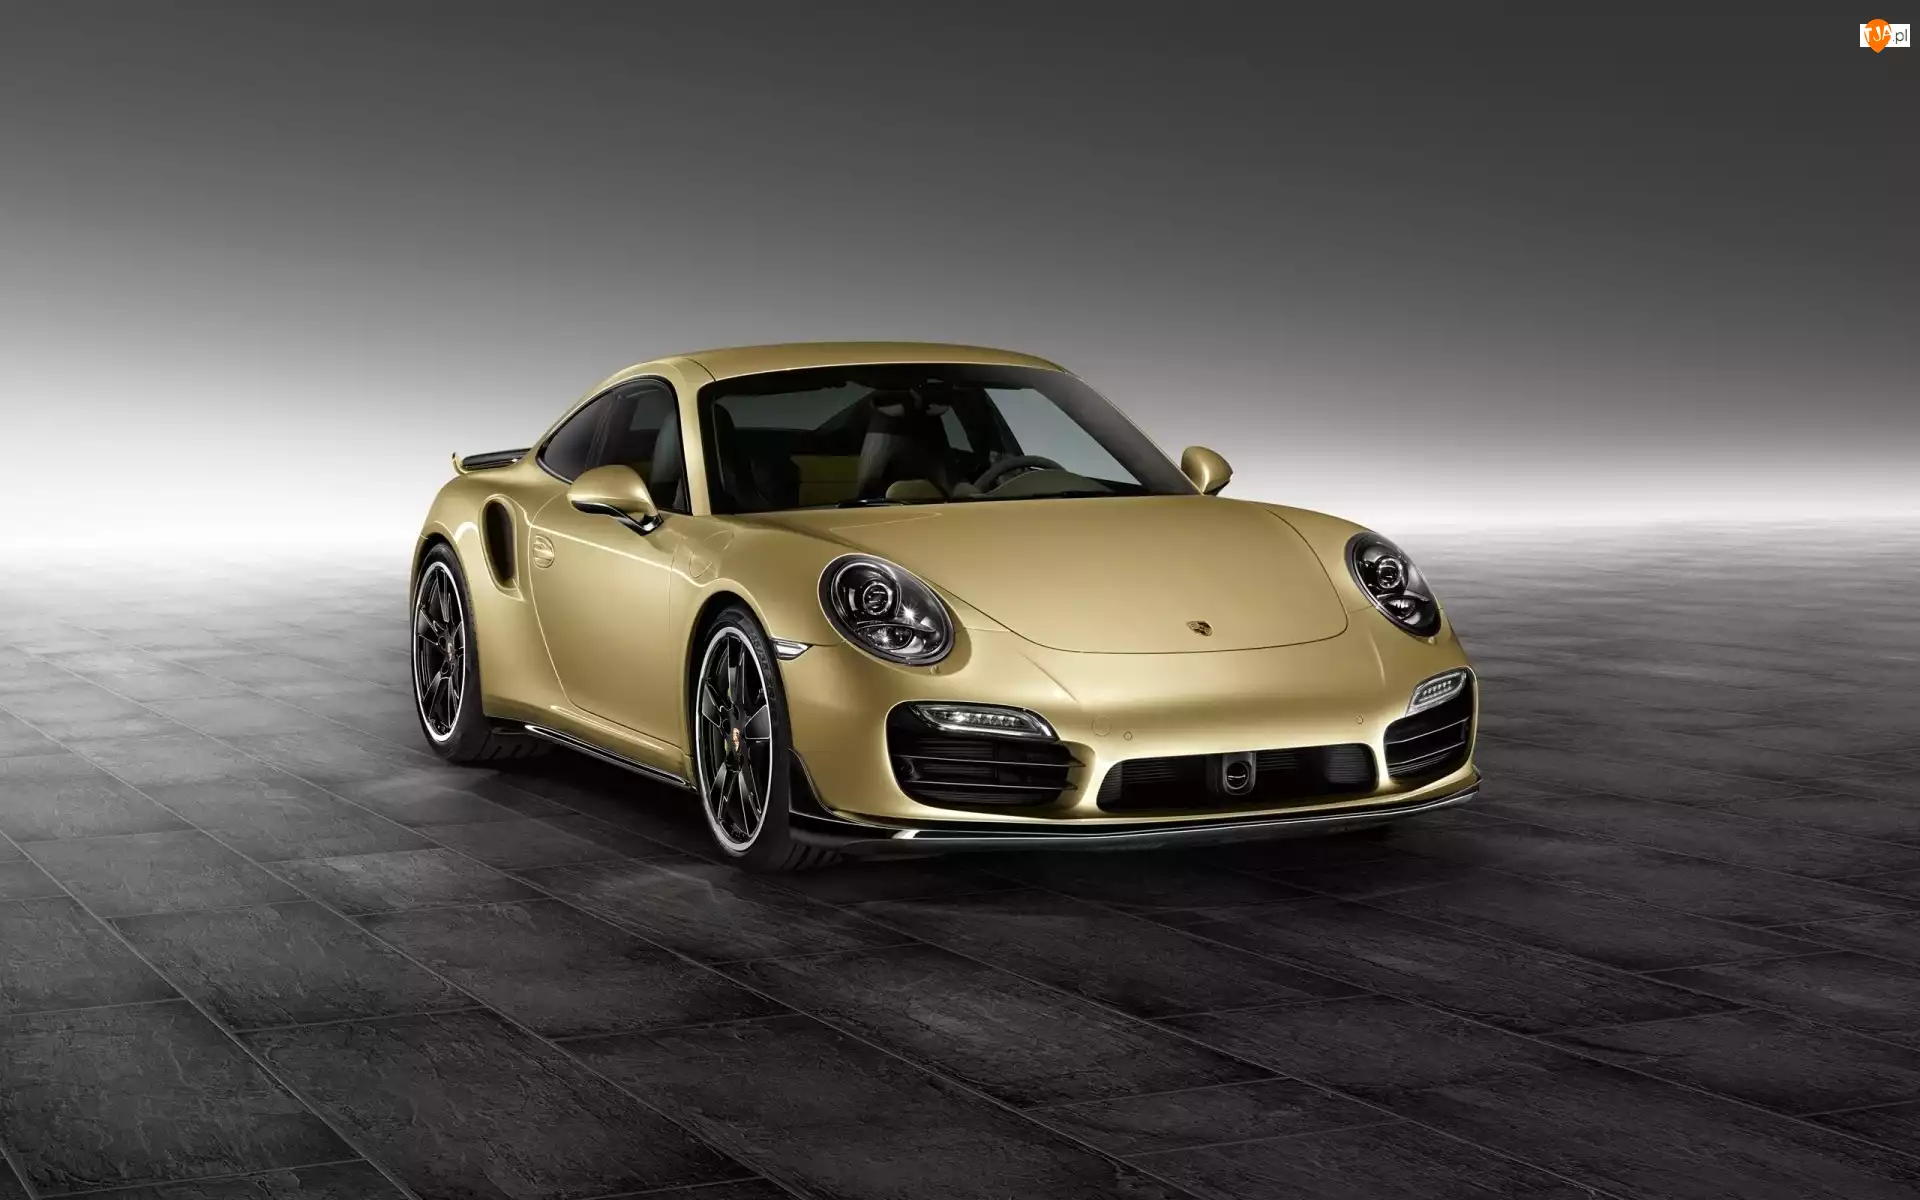 2014, Porsche 911 Turbo Lime Gold, 991